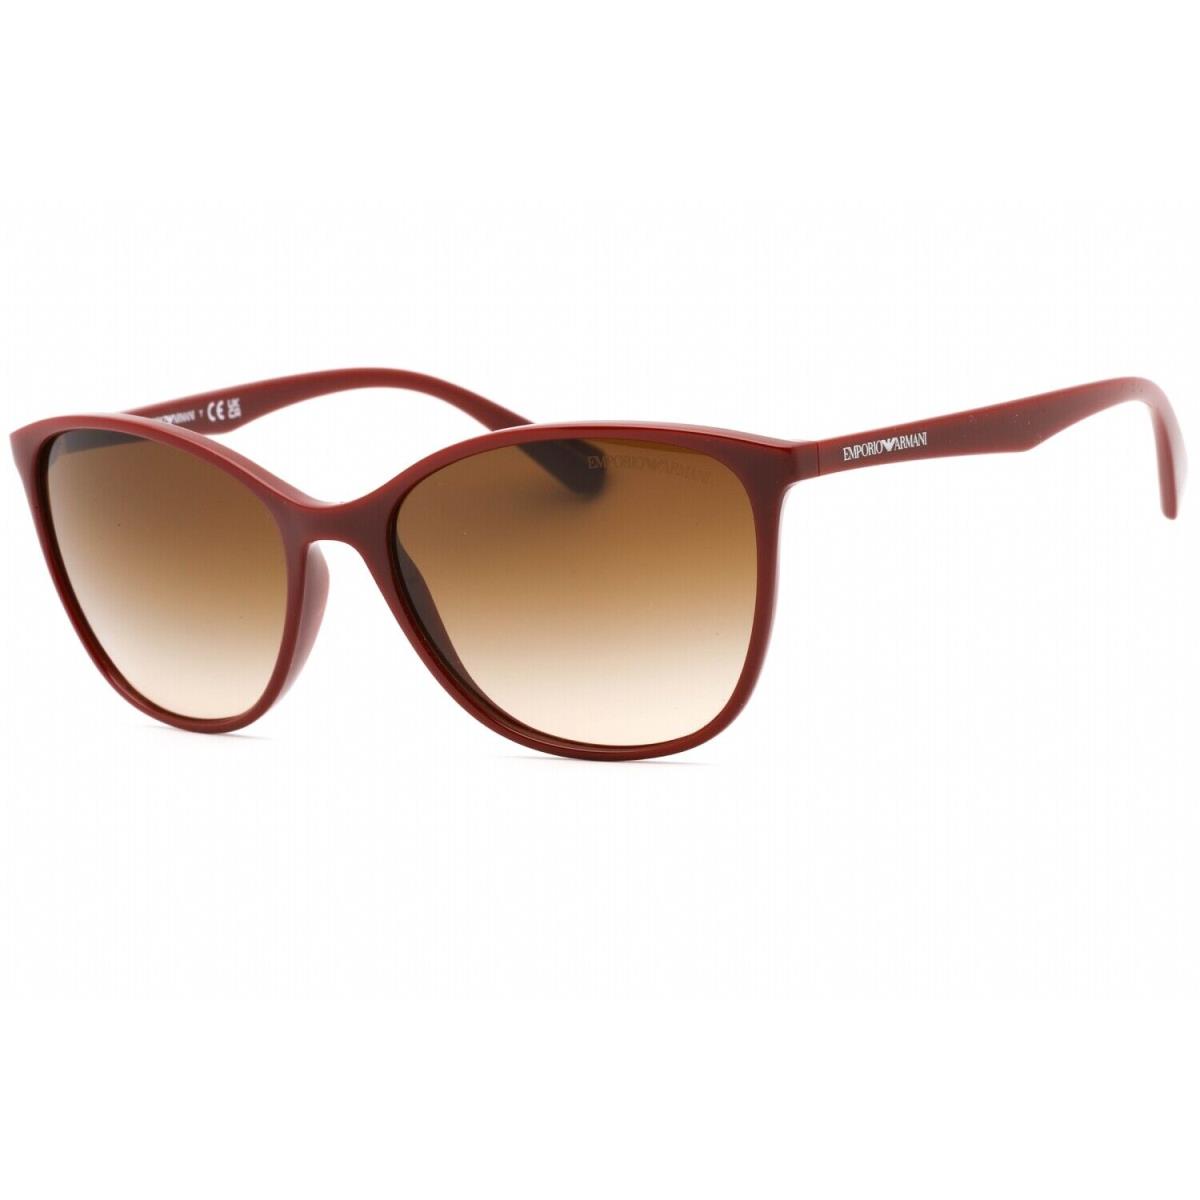 Emporio Armani EA4073-557613-56 Sunglasses Size 56mm 140mm 17mm Bordeaux Women